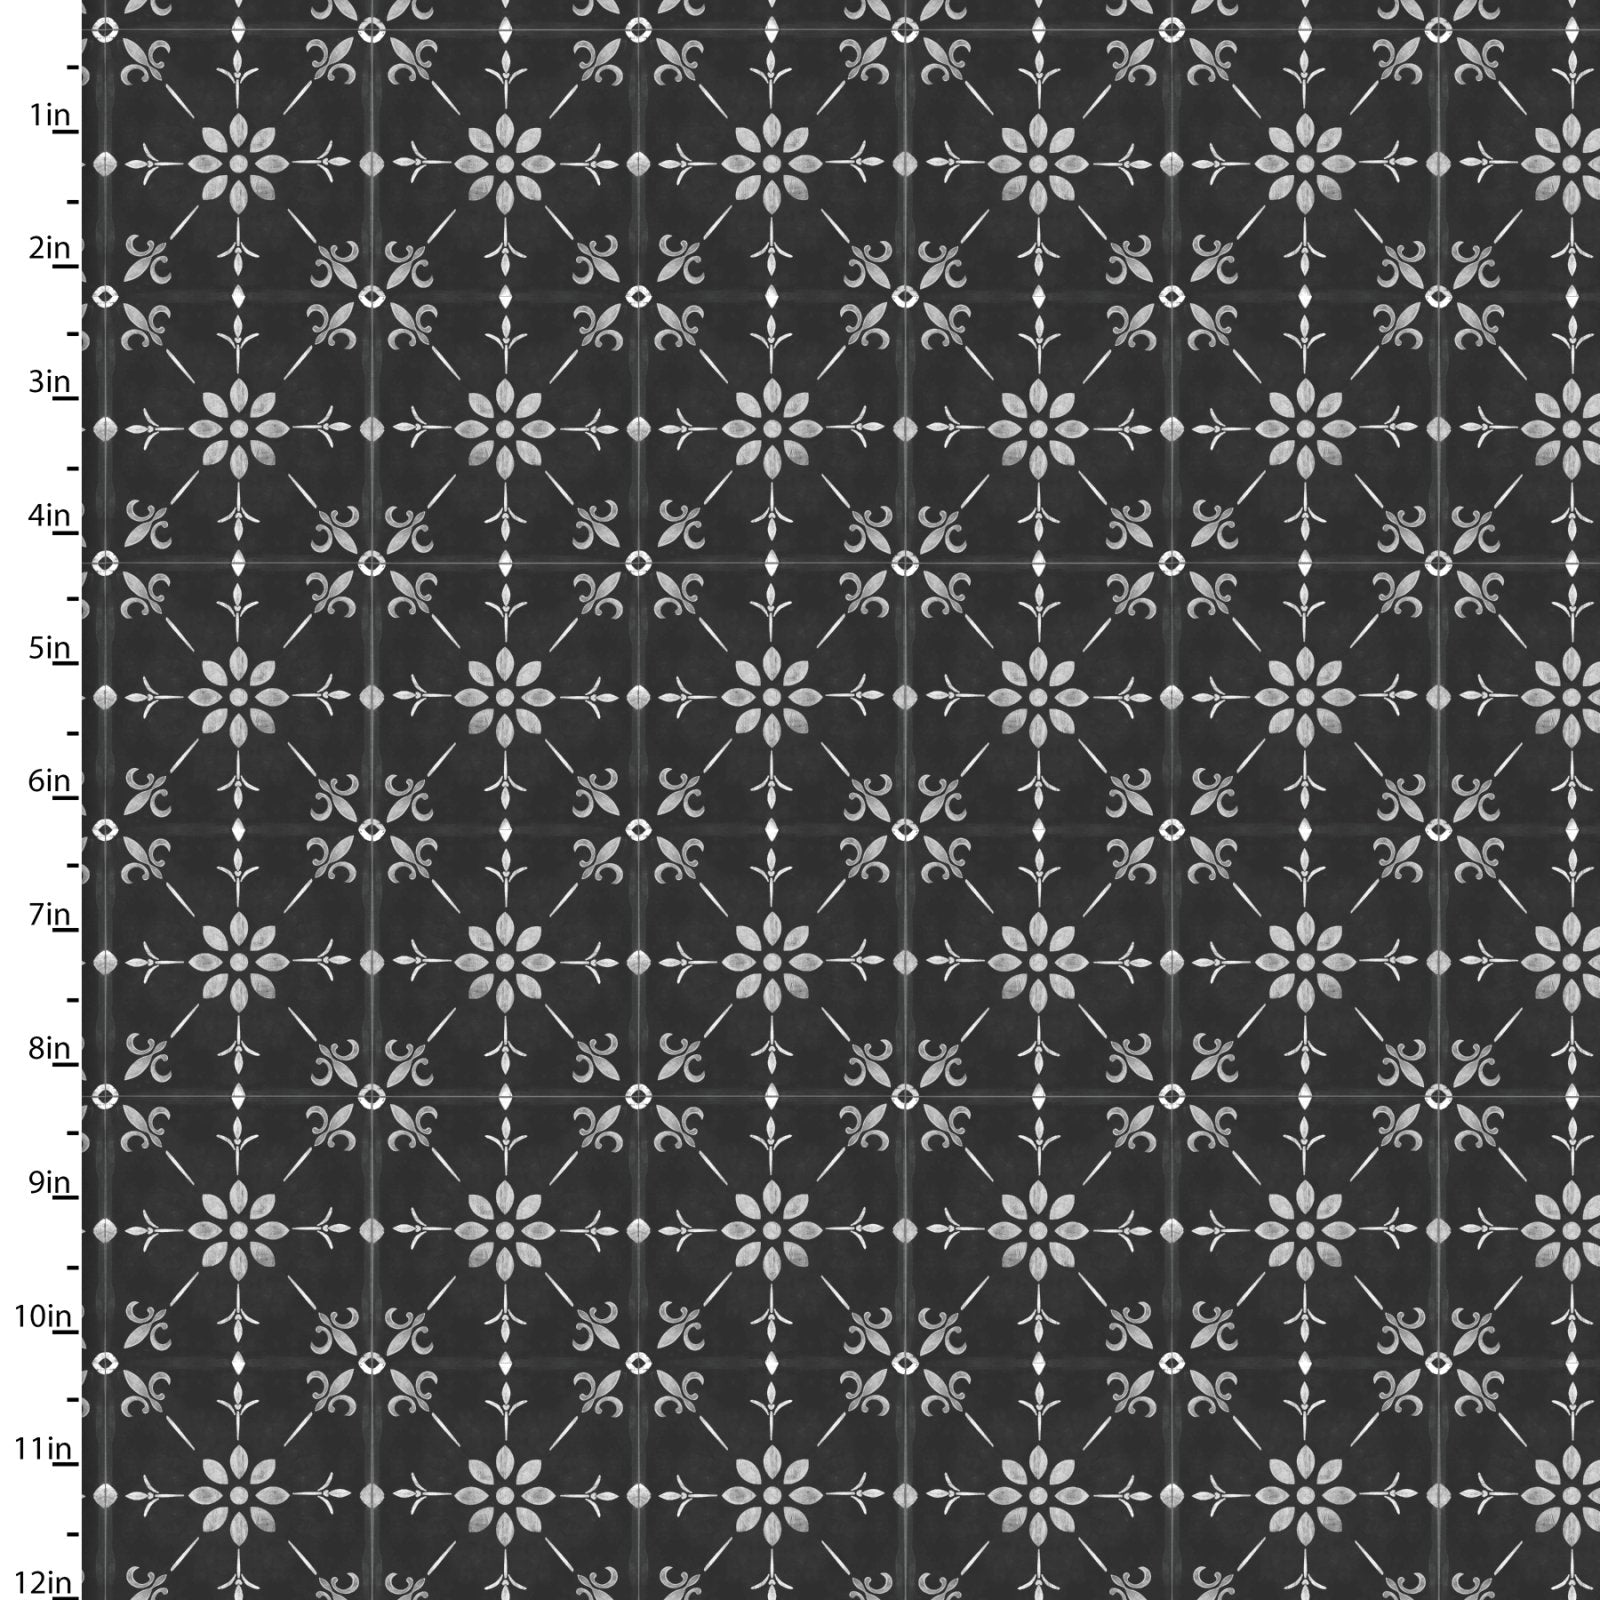 White Cottage Farm Quilt Fabric - Vintage Tile in Charcoal Gray  - 20881-CHR-CTN-D